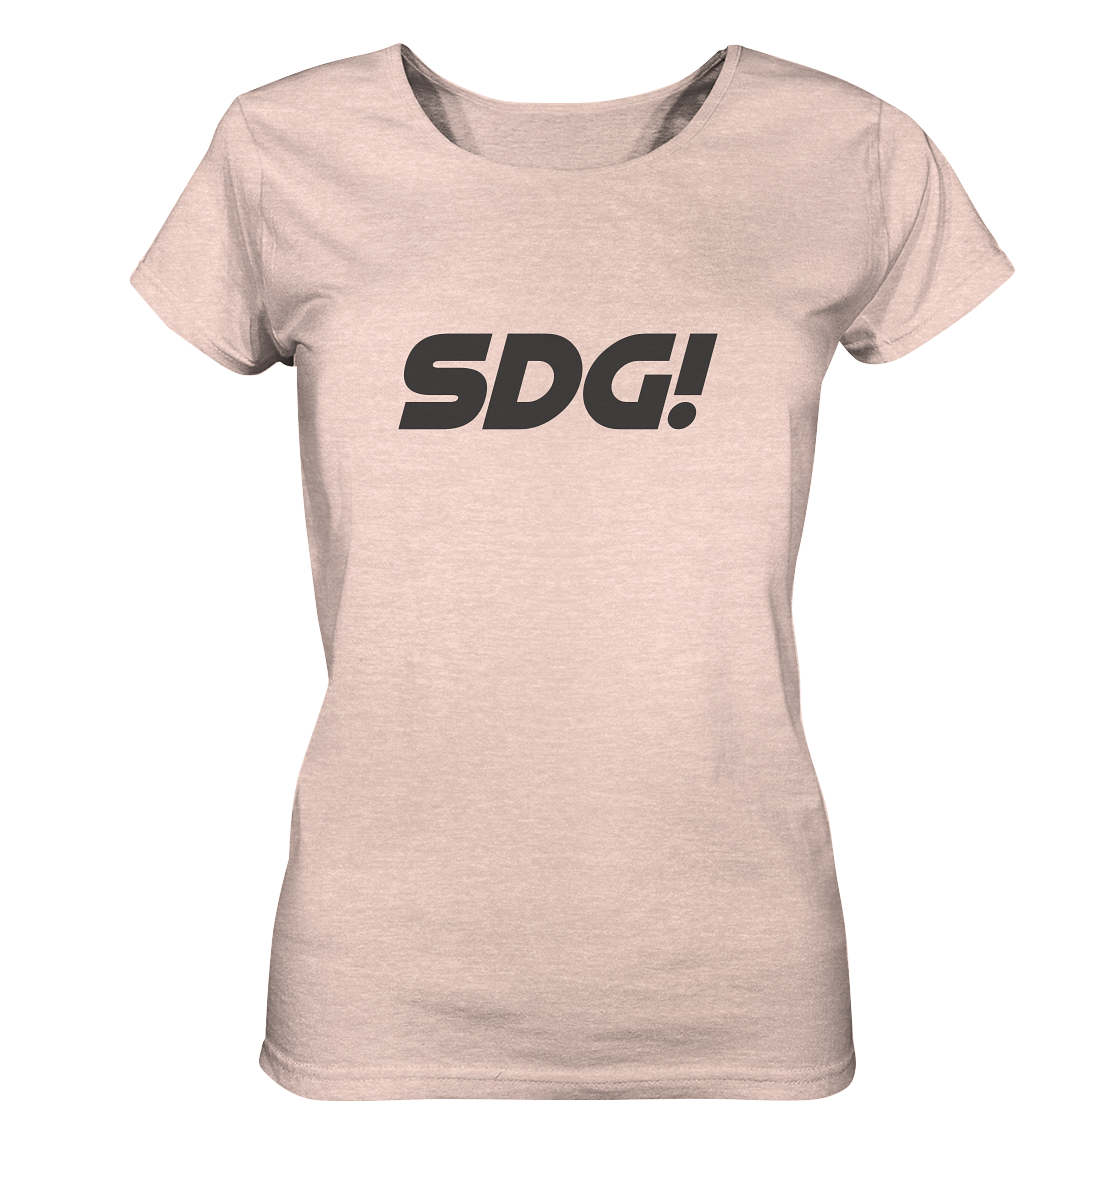 SDG!  - Ladies Organic Shirt